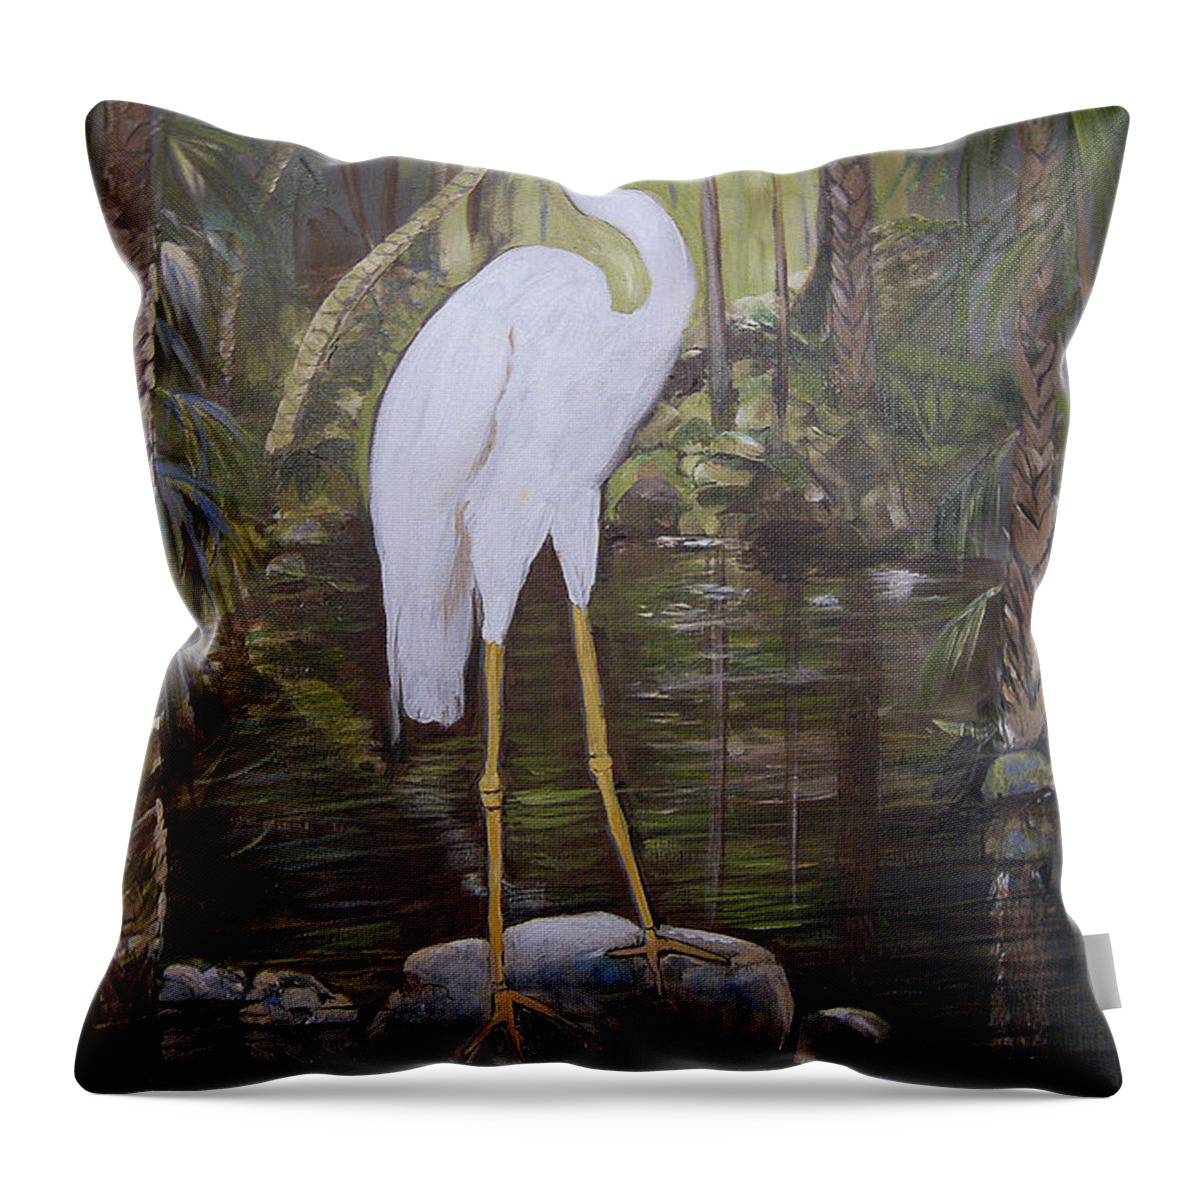 Florida Bird Throw Pillow featuring the painting Florida Bird by Arlen Avernian - Thorensen